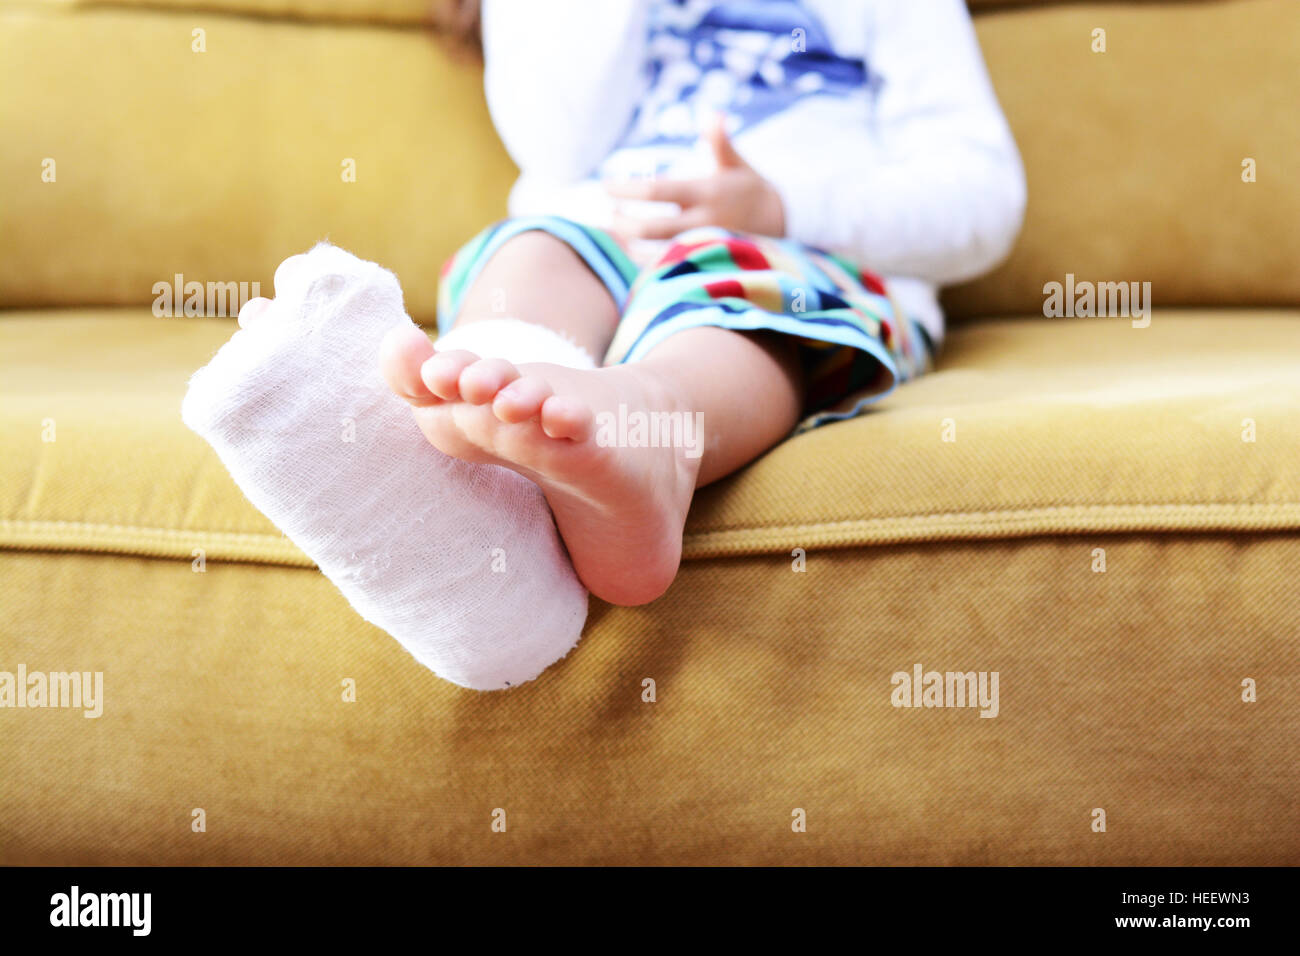 Little child with plaster bandage on leg heel fractured Stock Photo